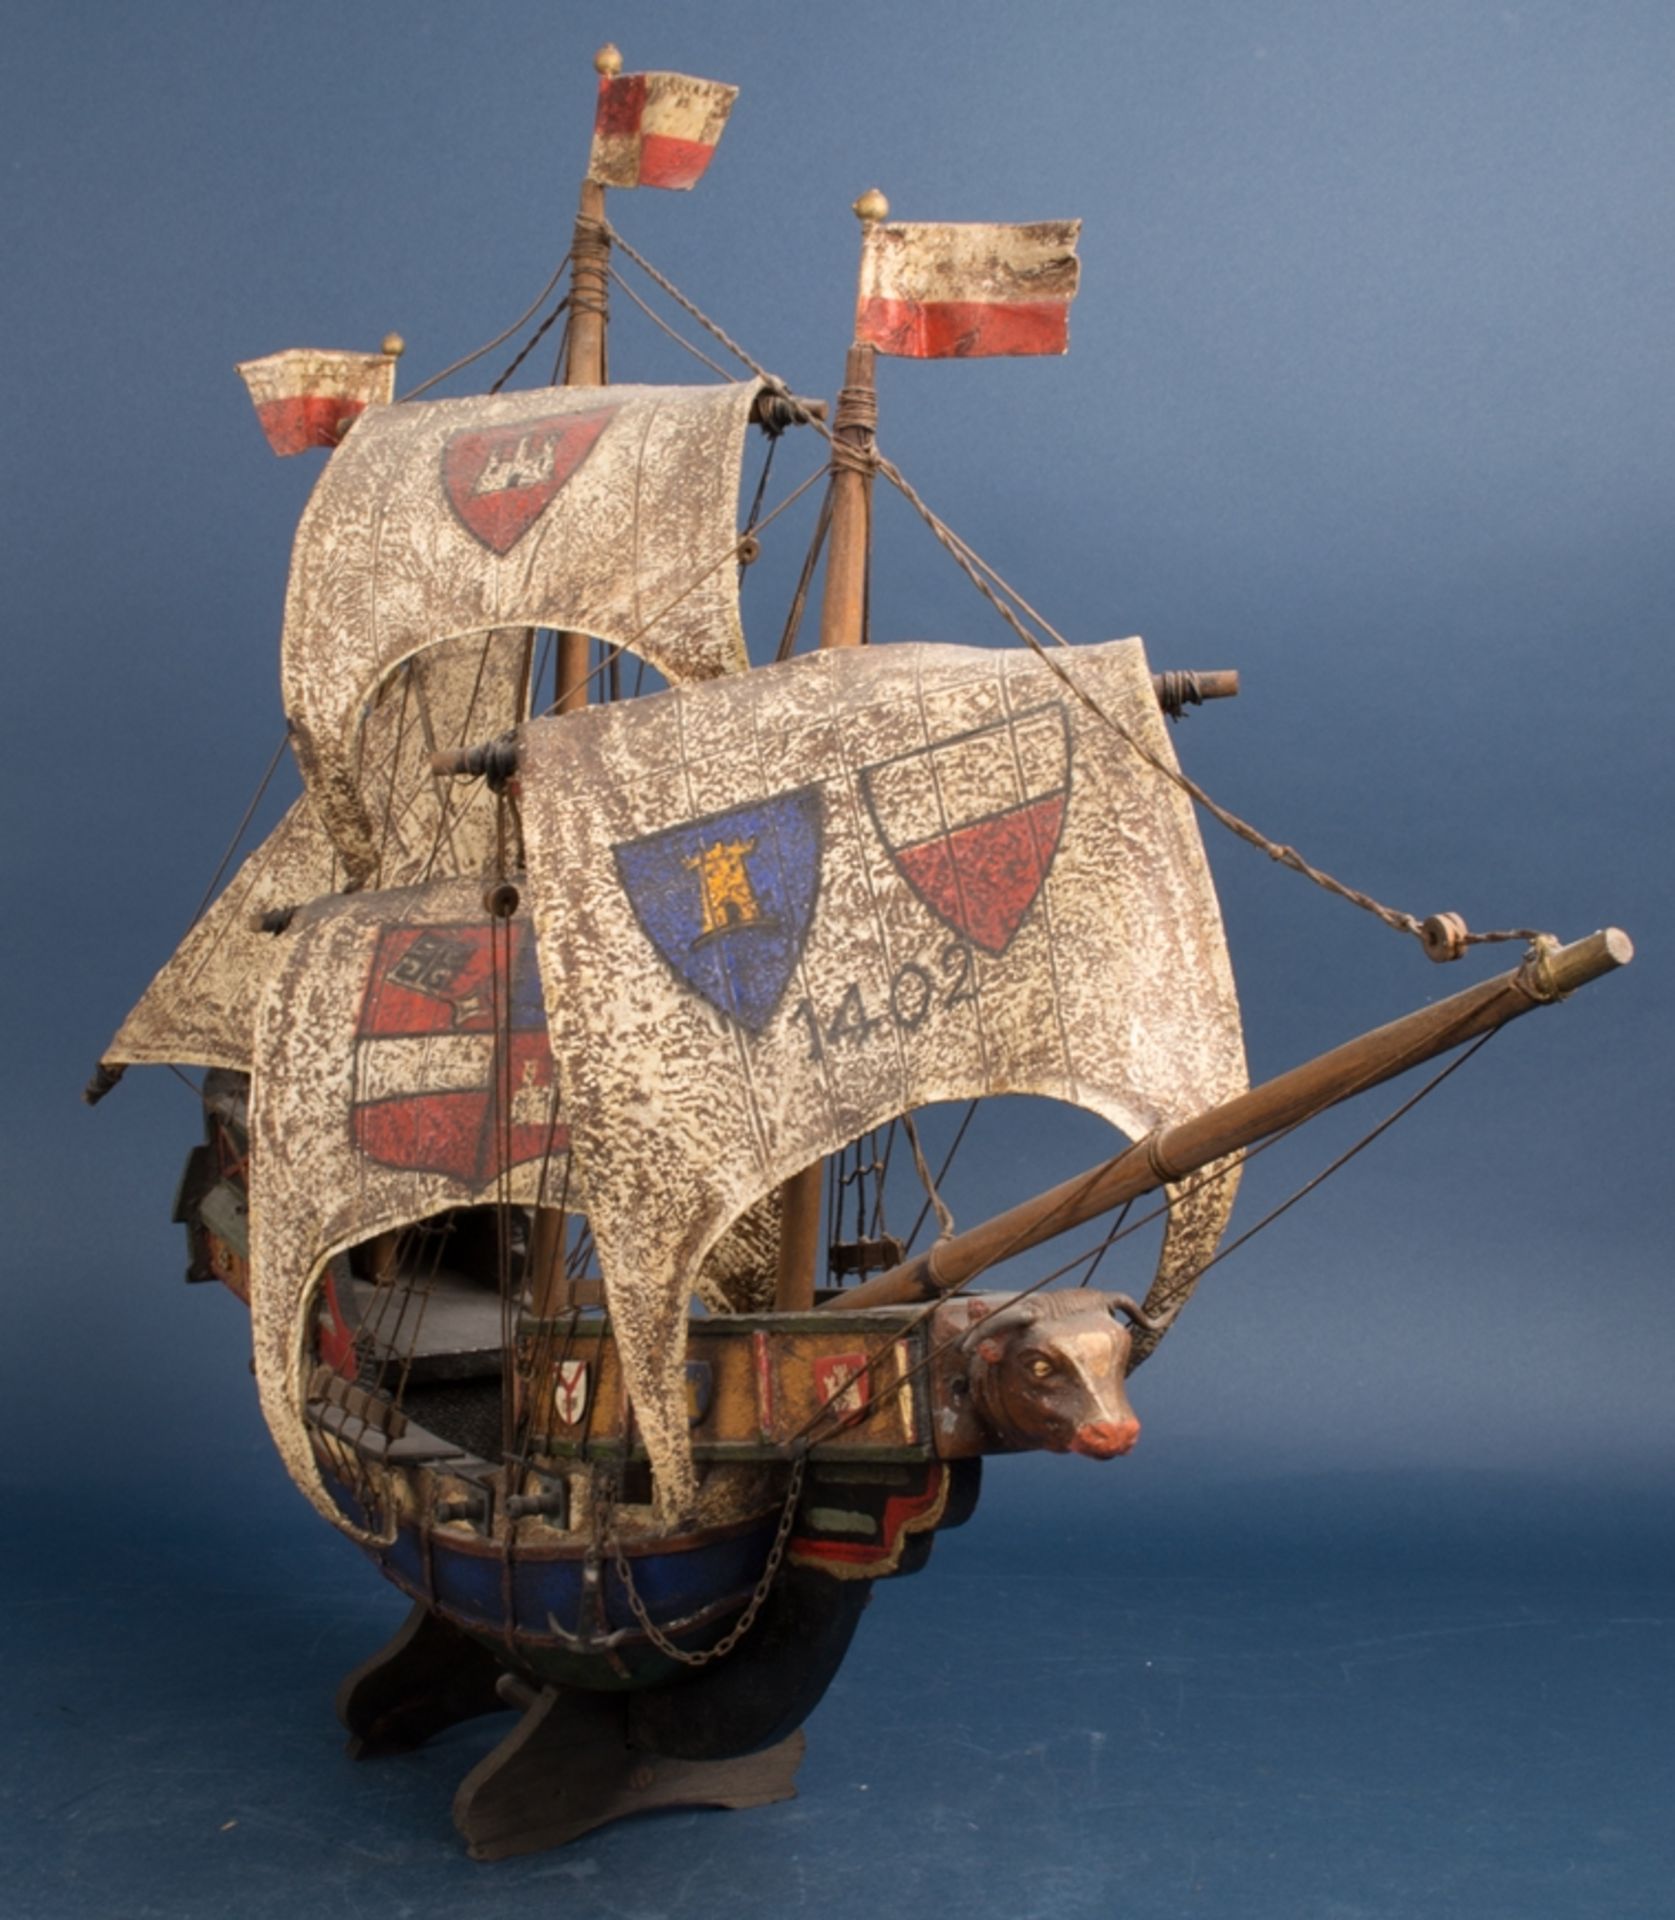 "BUNTE KUH" - Modellschiff, 2. Drittel 20. Jhdt., betitelt, Holz geschnitzt, farbig gefasst, textile - Bild 2 aus 9